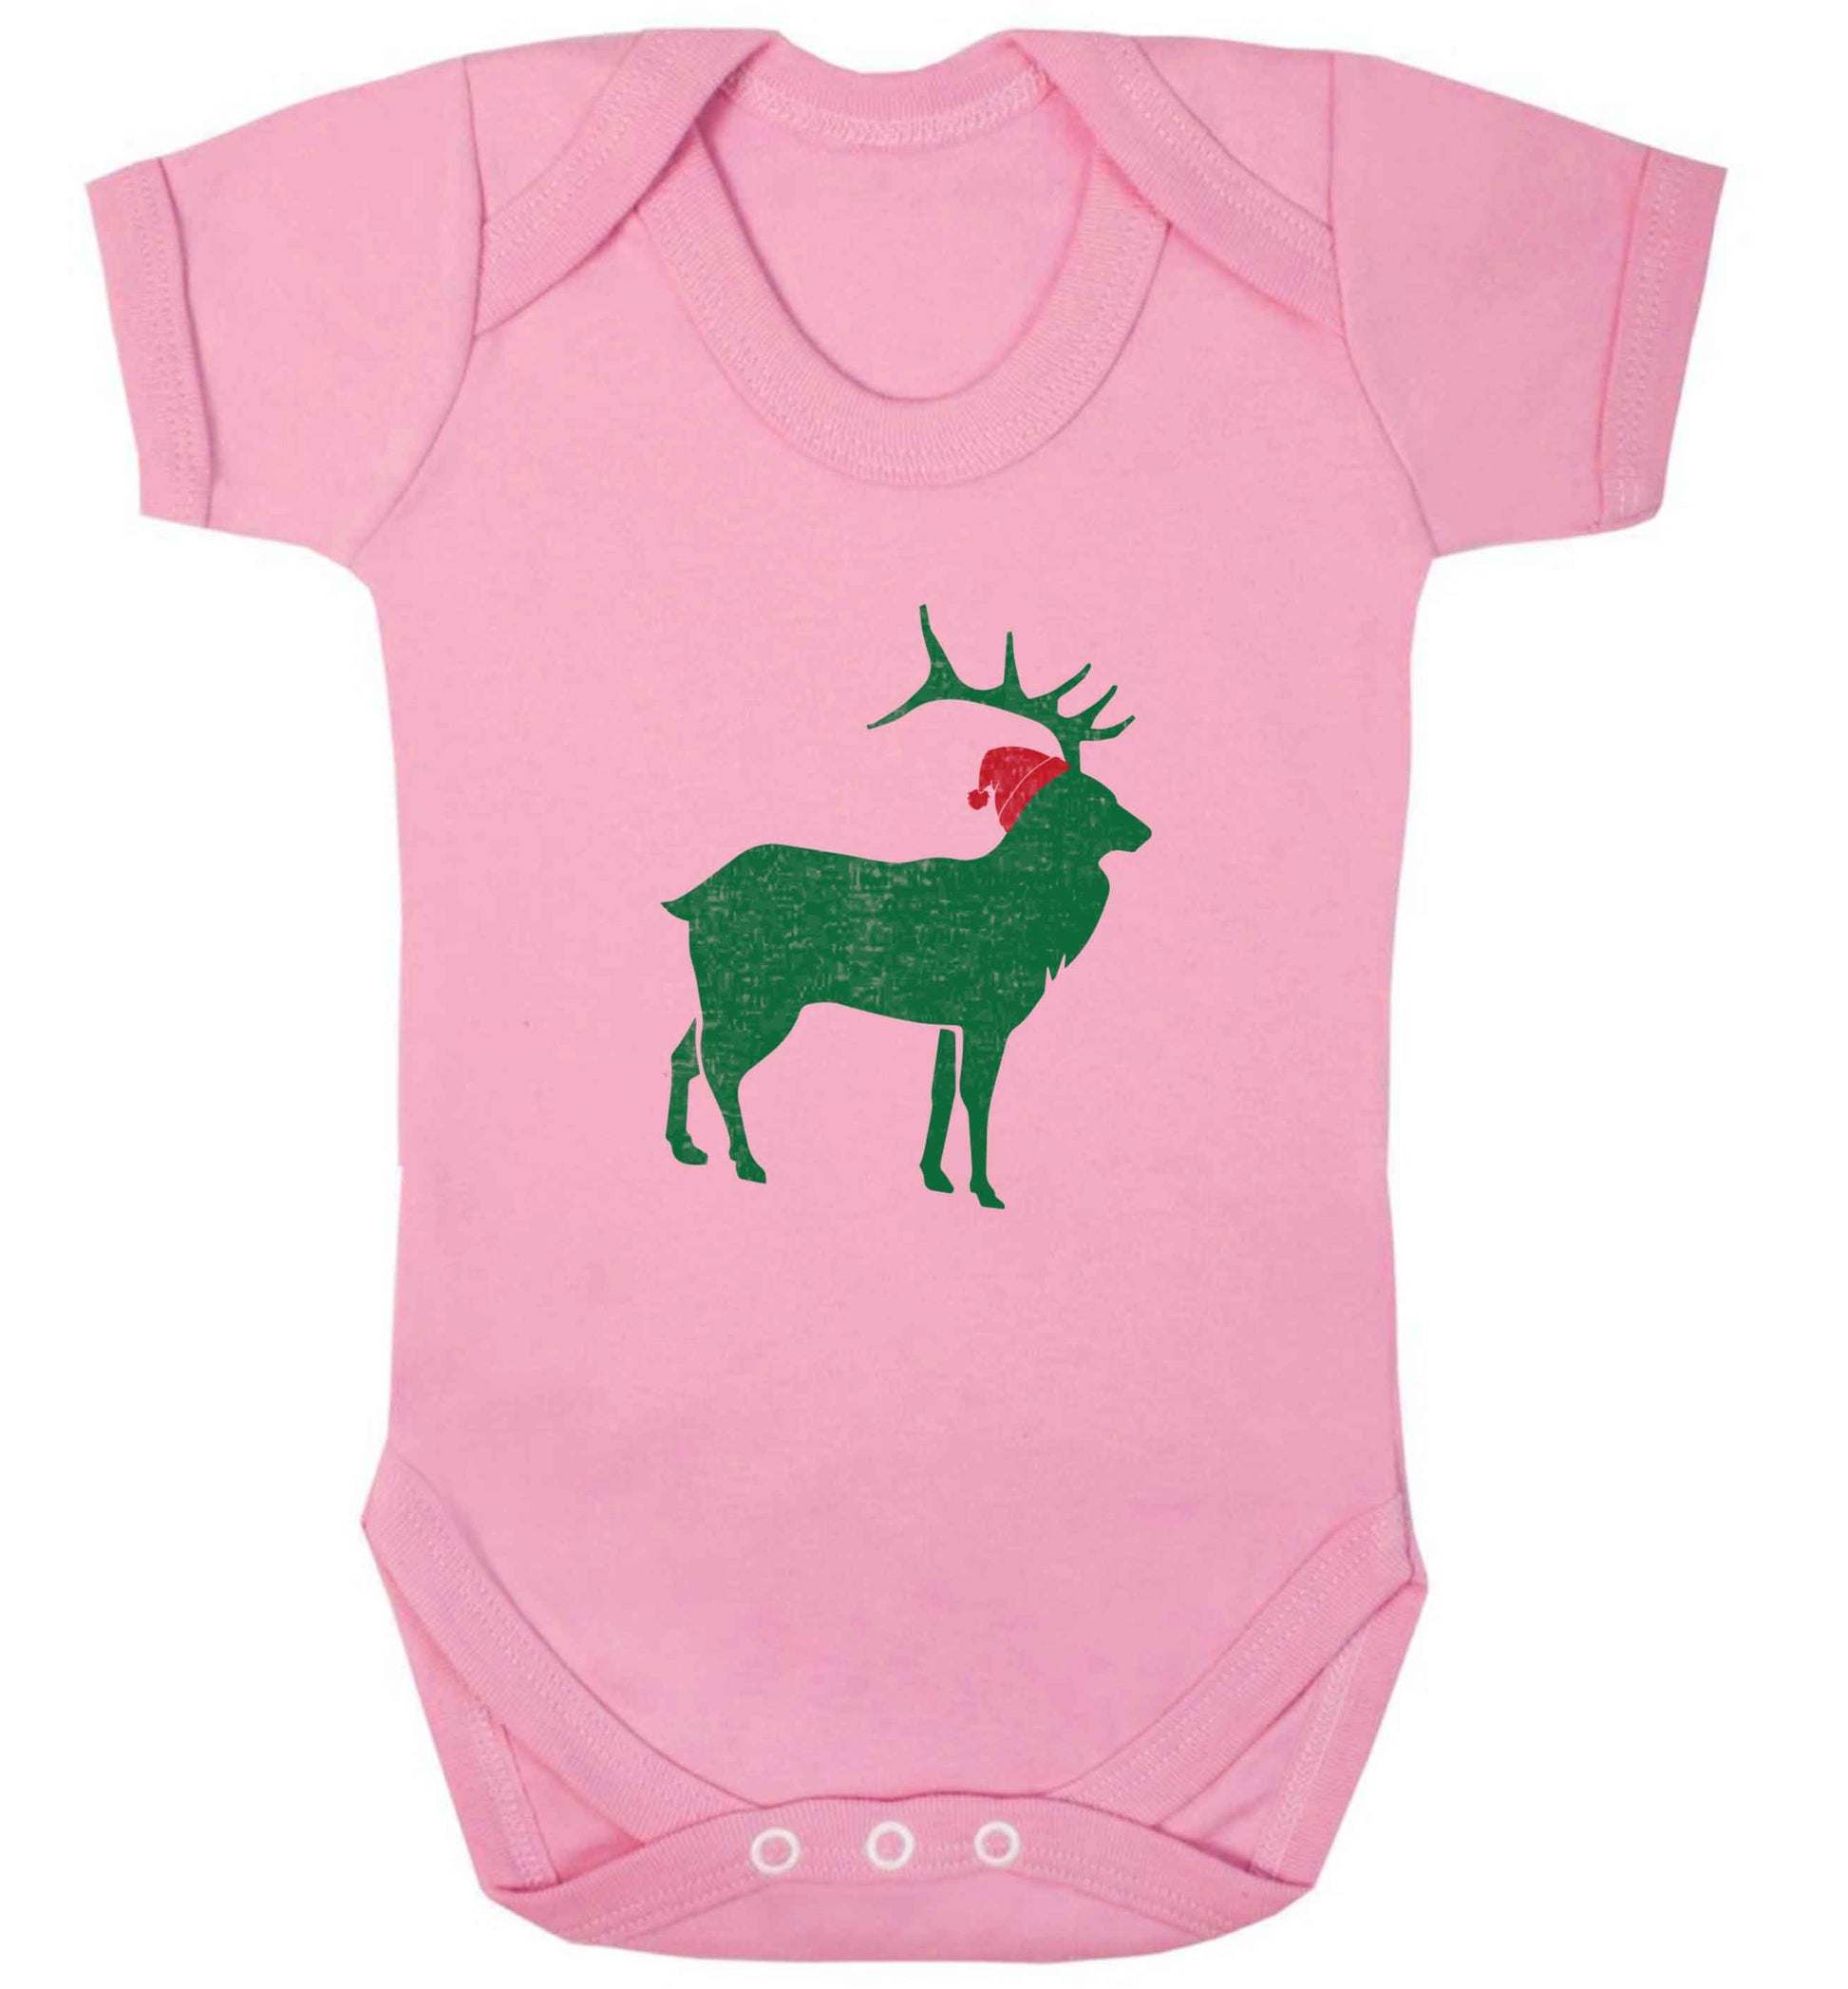 Green stag Santa baby vest pale pink 18-24 months